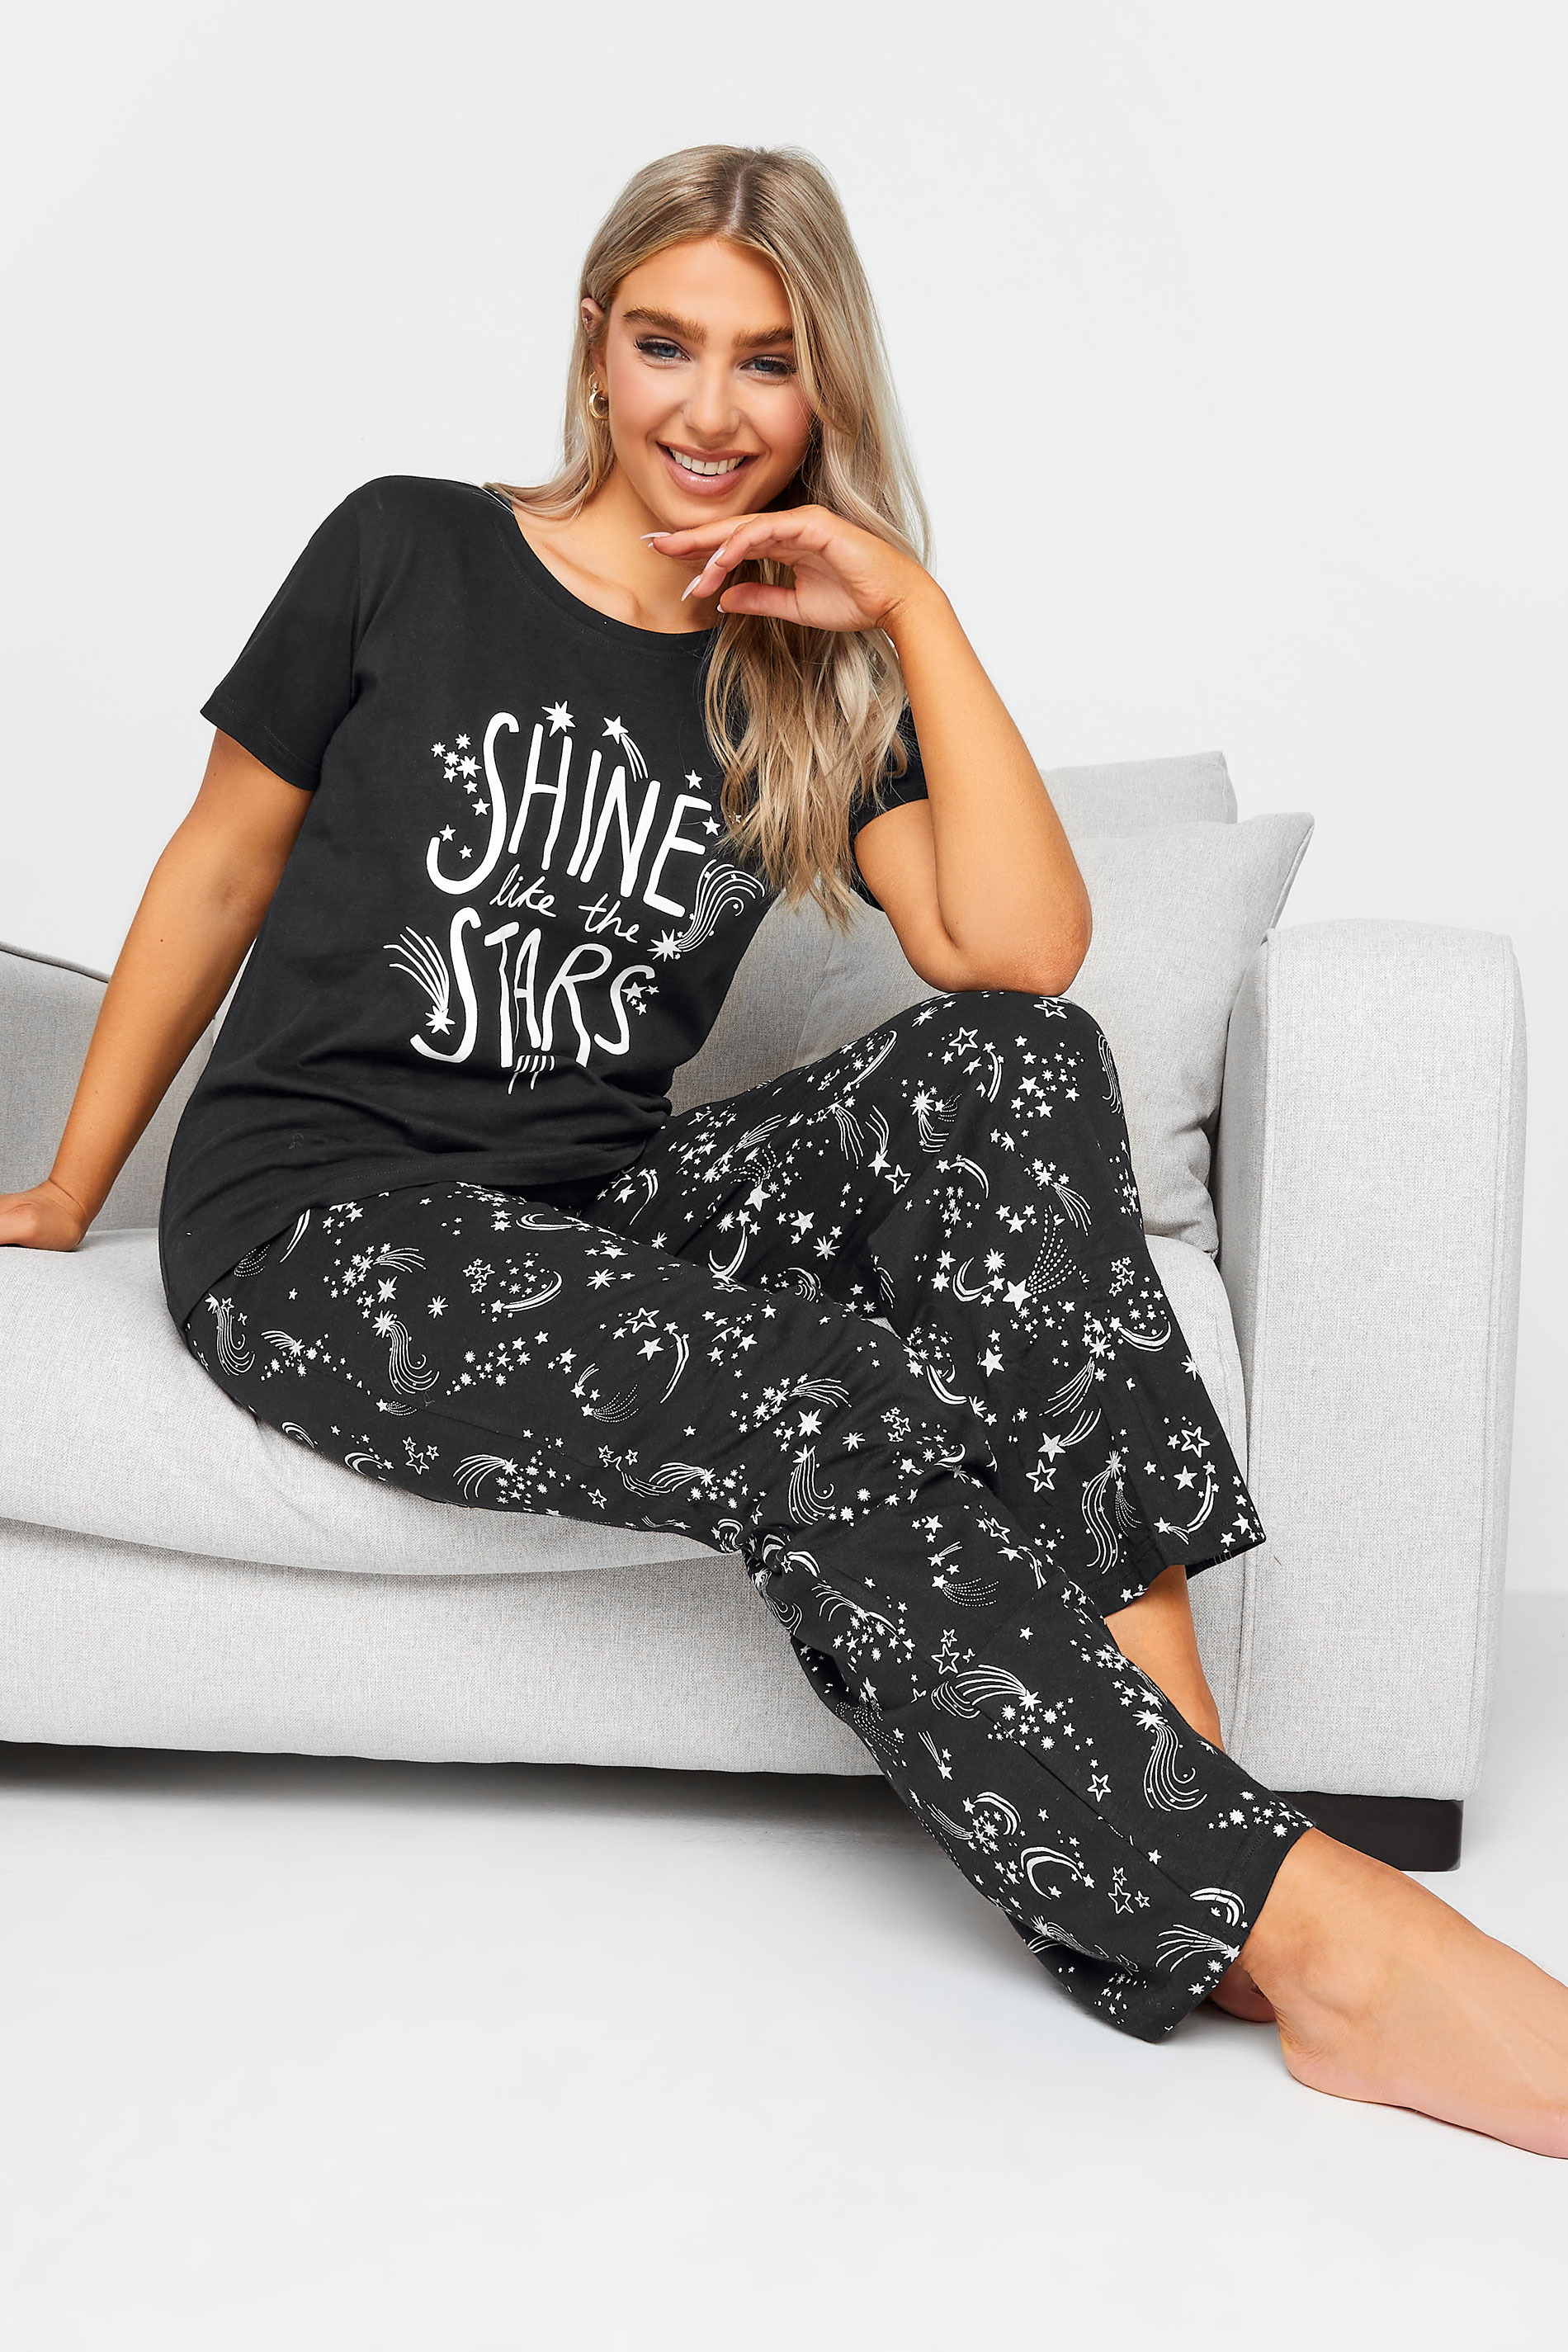 M&Co Black Cotton 'Shine Like the Stars' Slogan Pyjama Set | M&Co 1